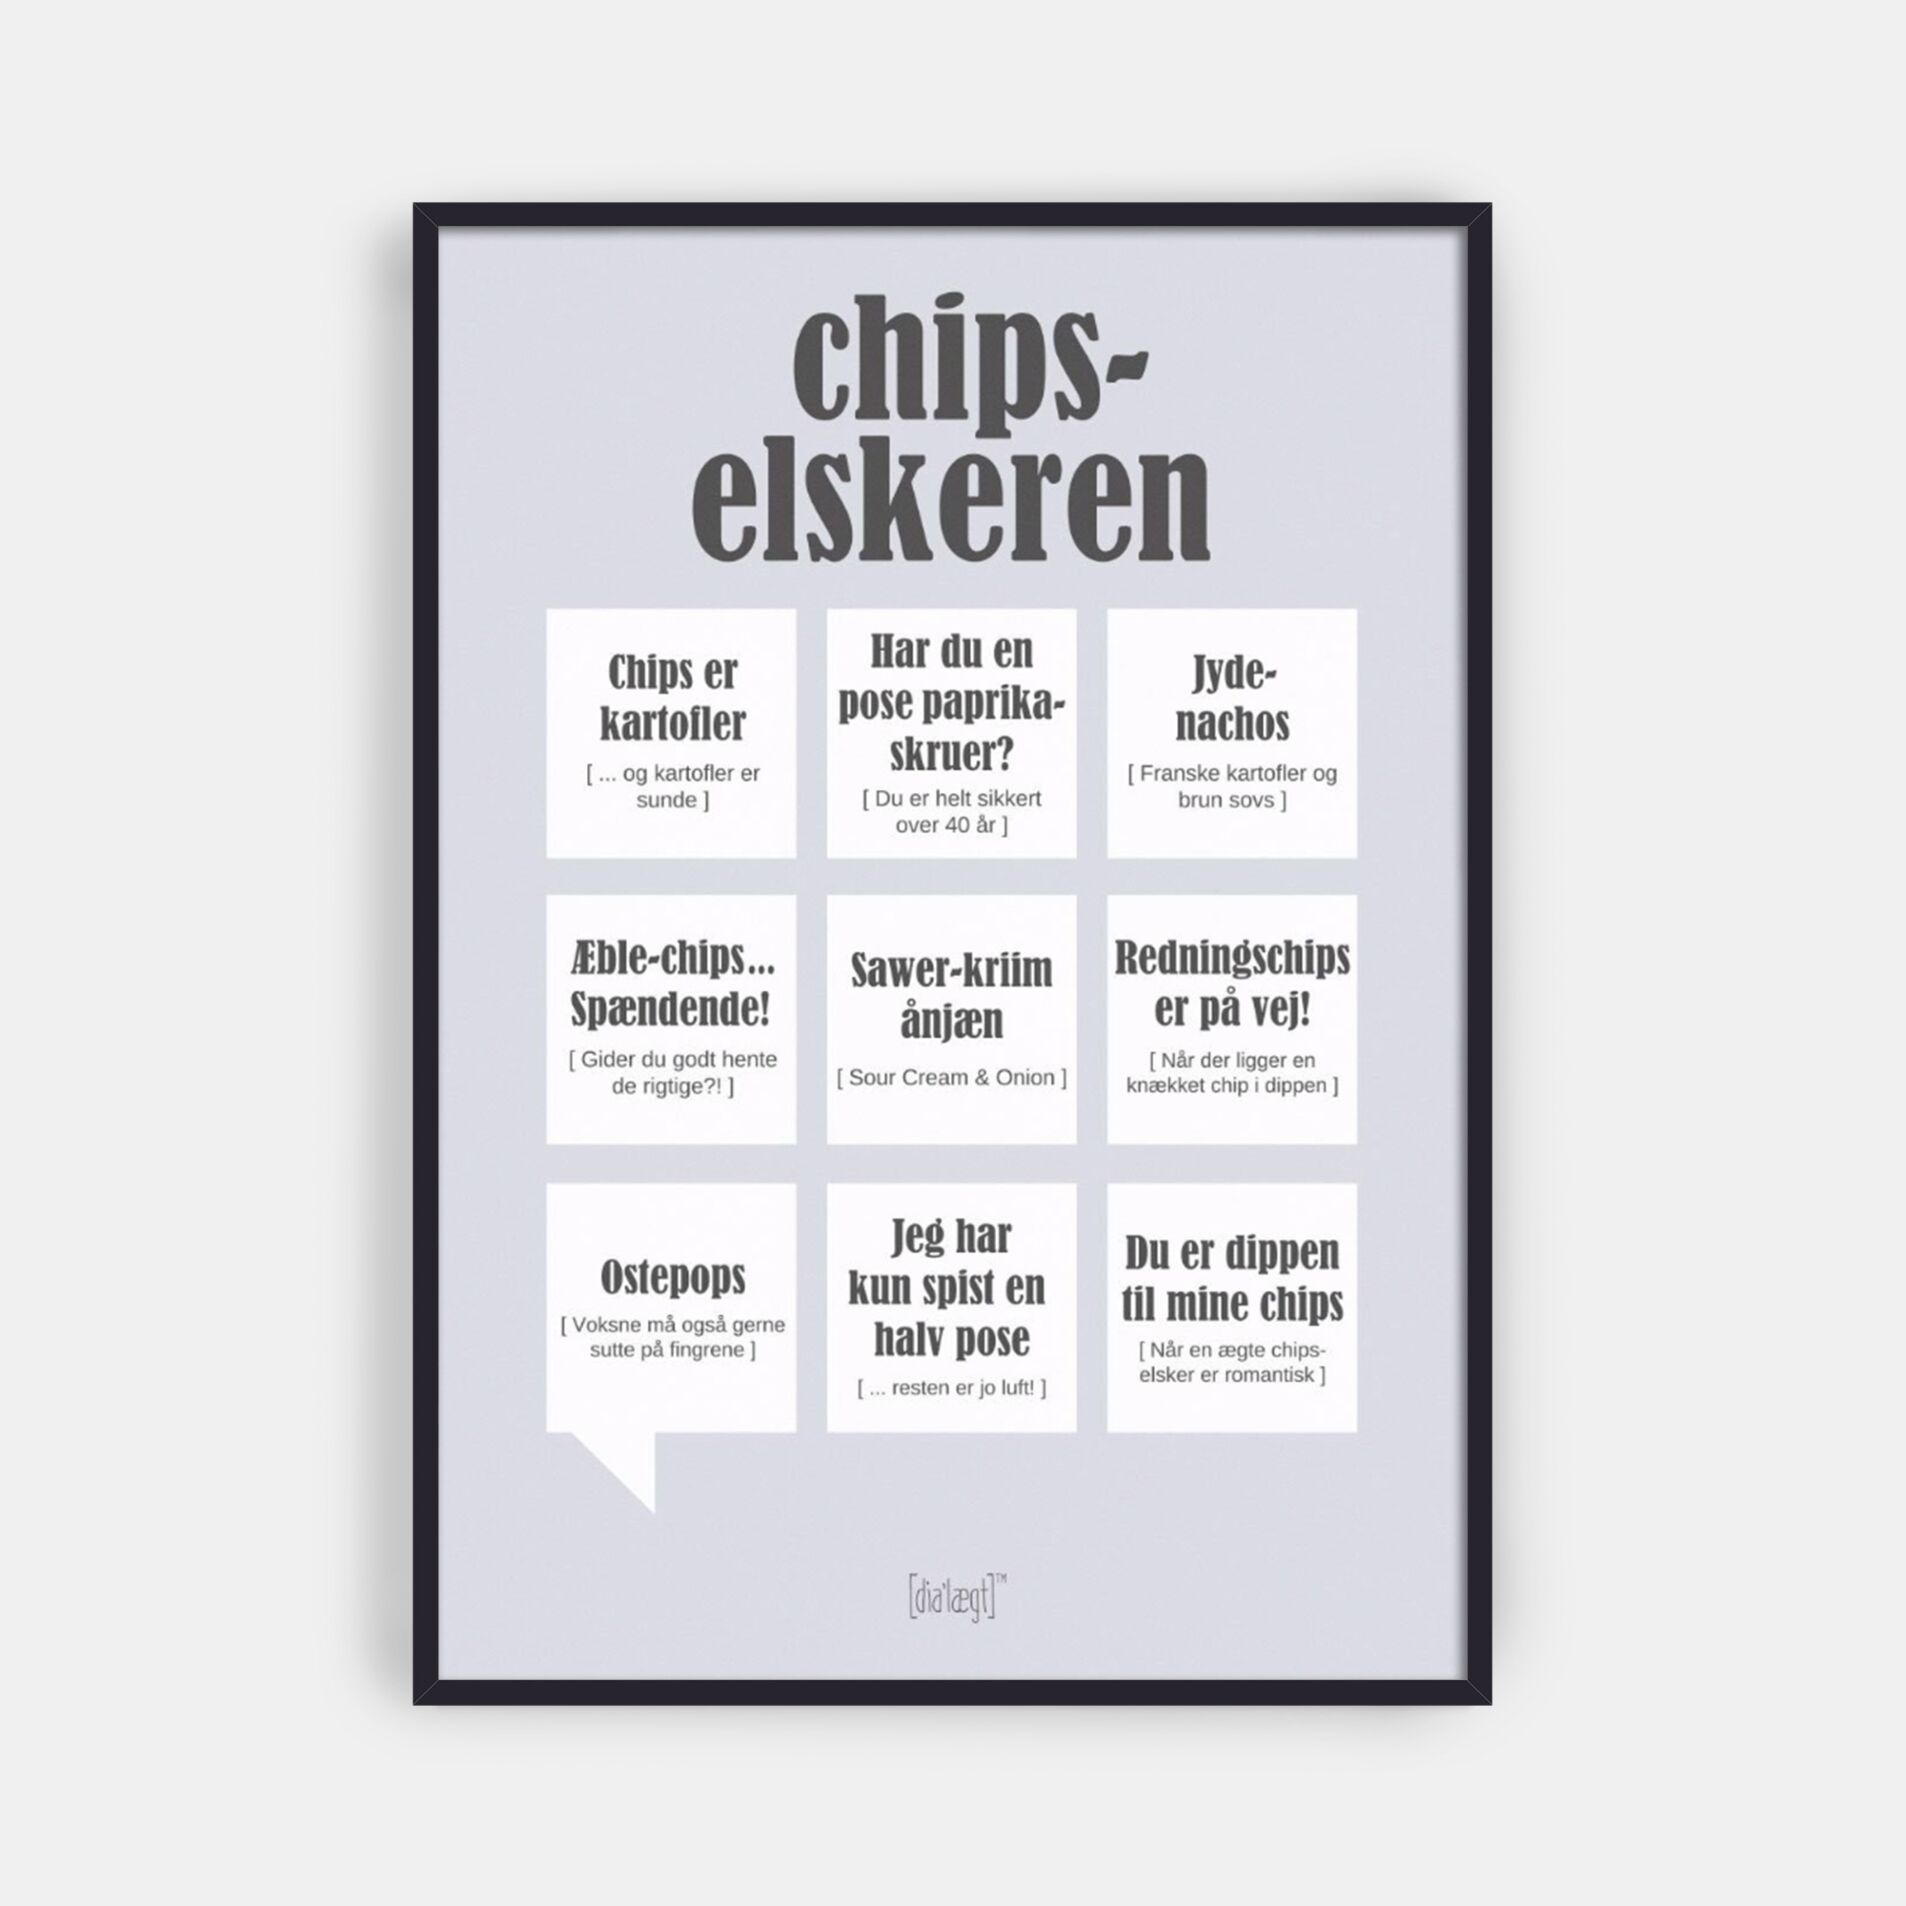 Chipselskeren - chips? Her er plakaten til dig!